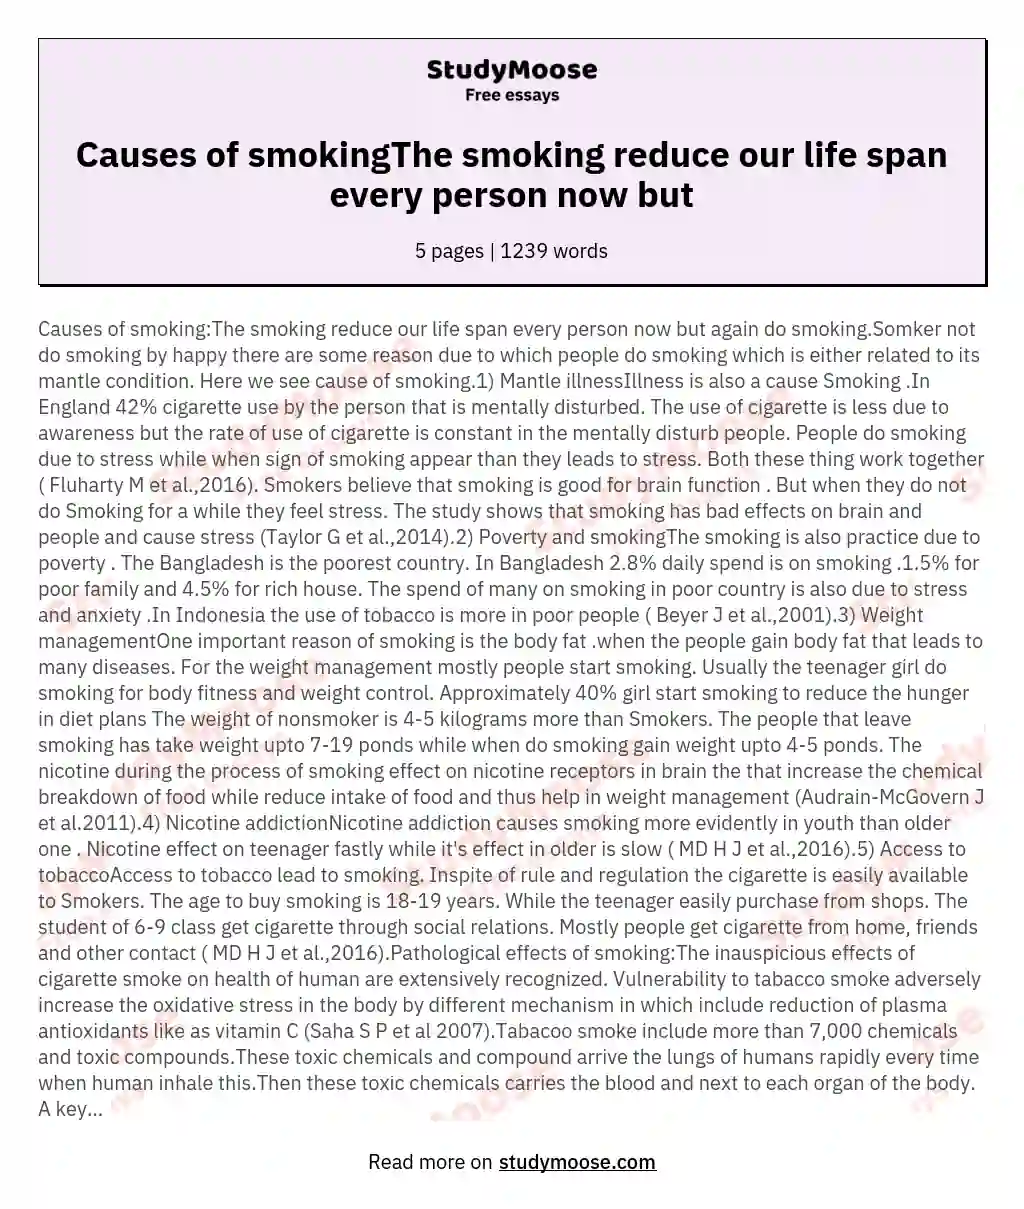 Causes of smokingThe smoking reduce our life span every person now but